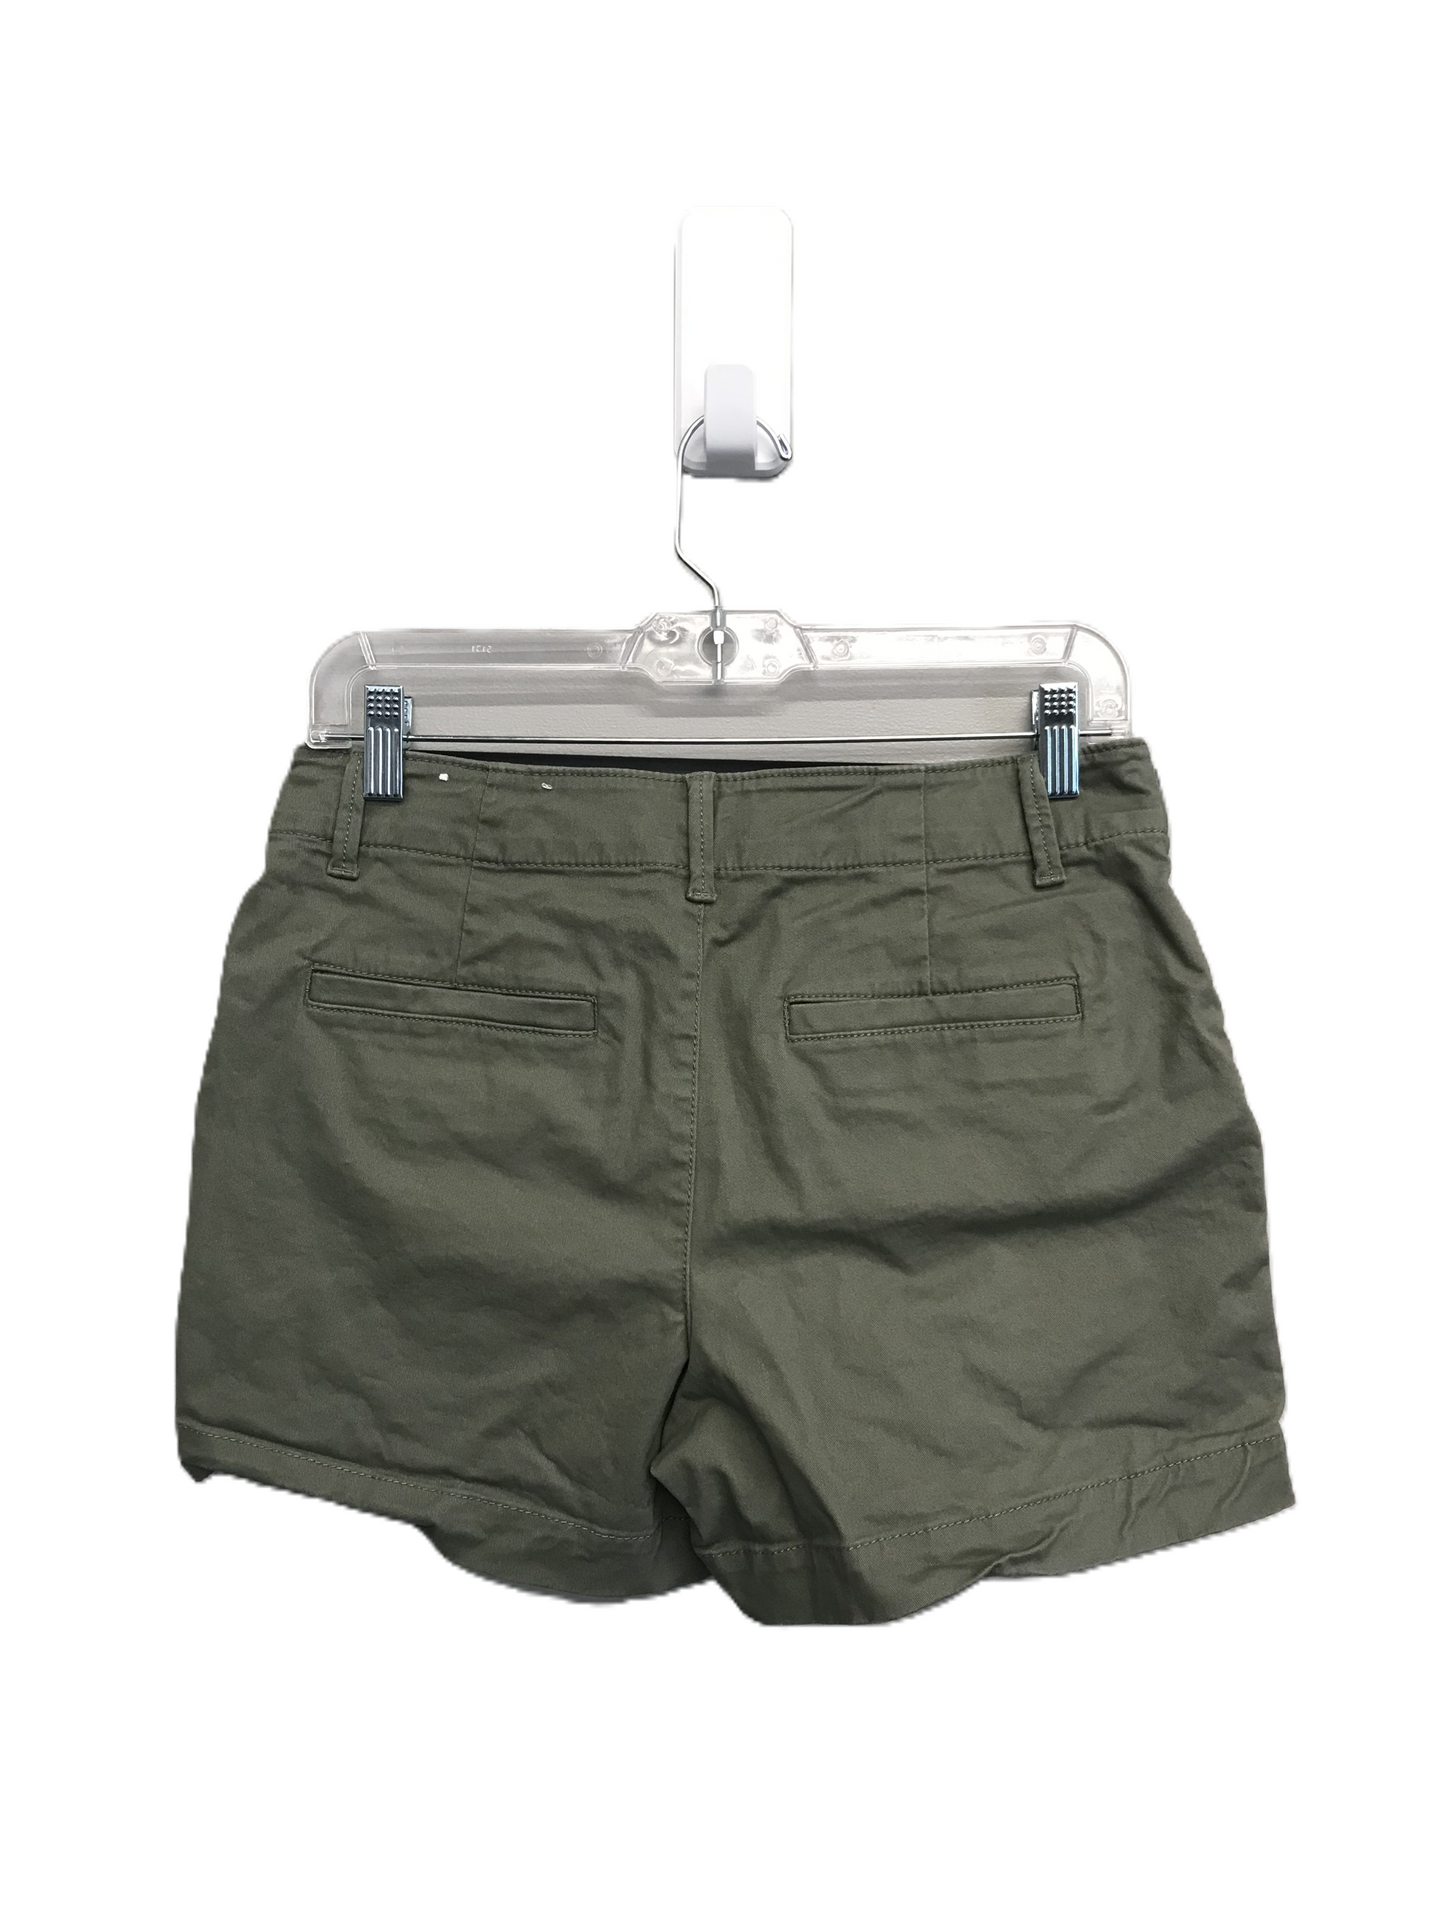 Green Shorts By Loft, Size: 2